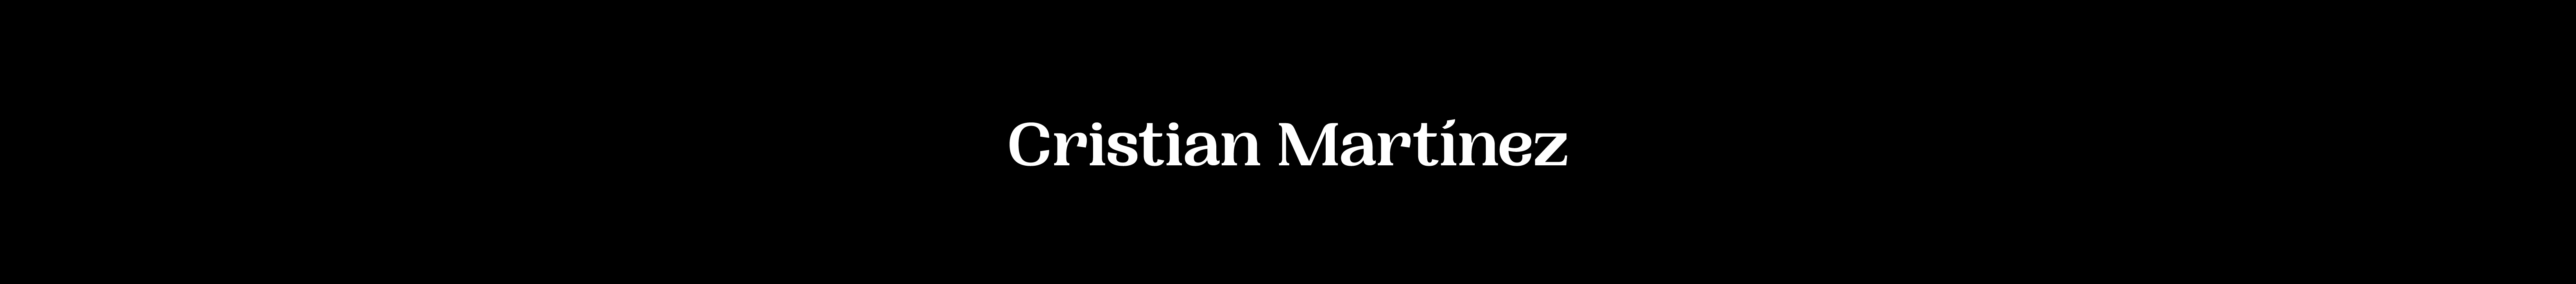 Cristian Martínezs profilbanner